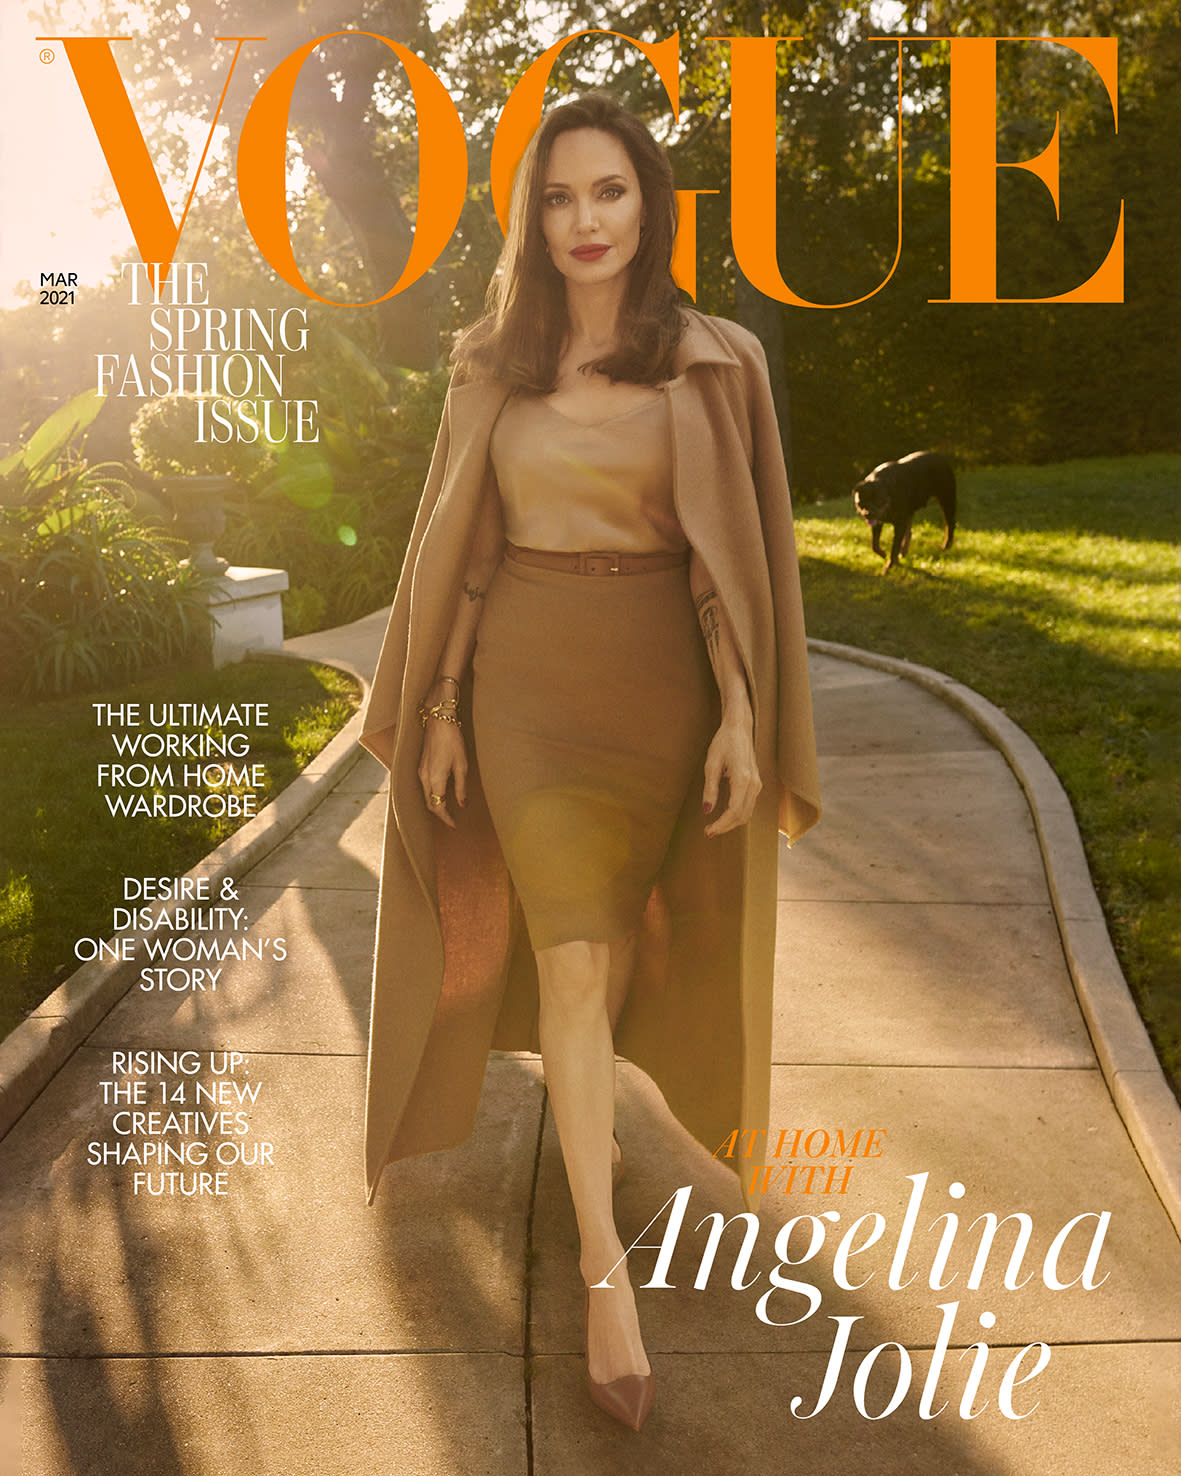 Vogue’s front cover (Craig McDean/British Vogue)